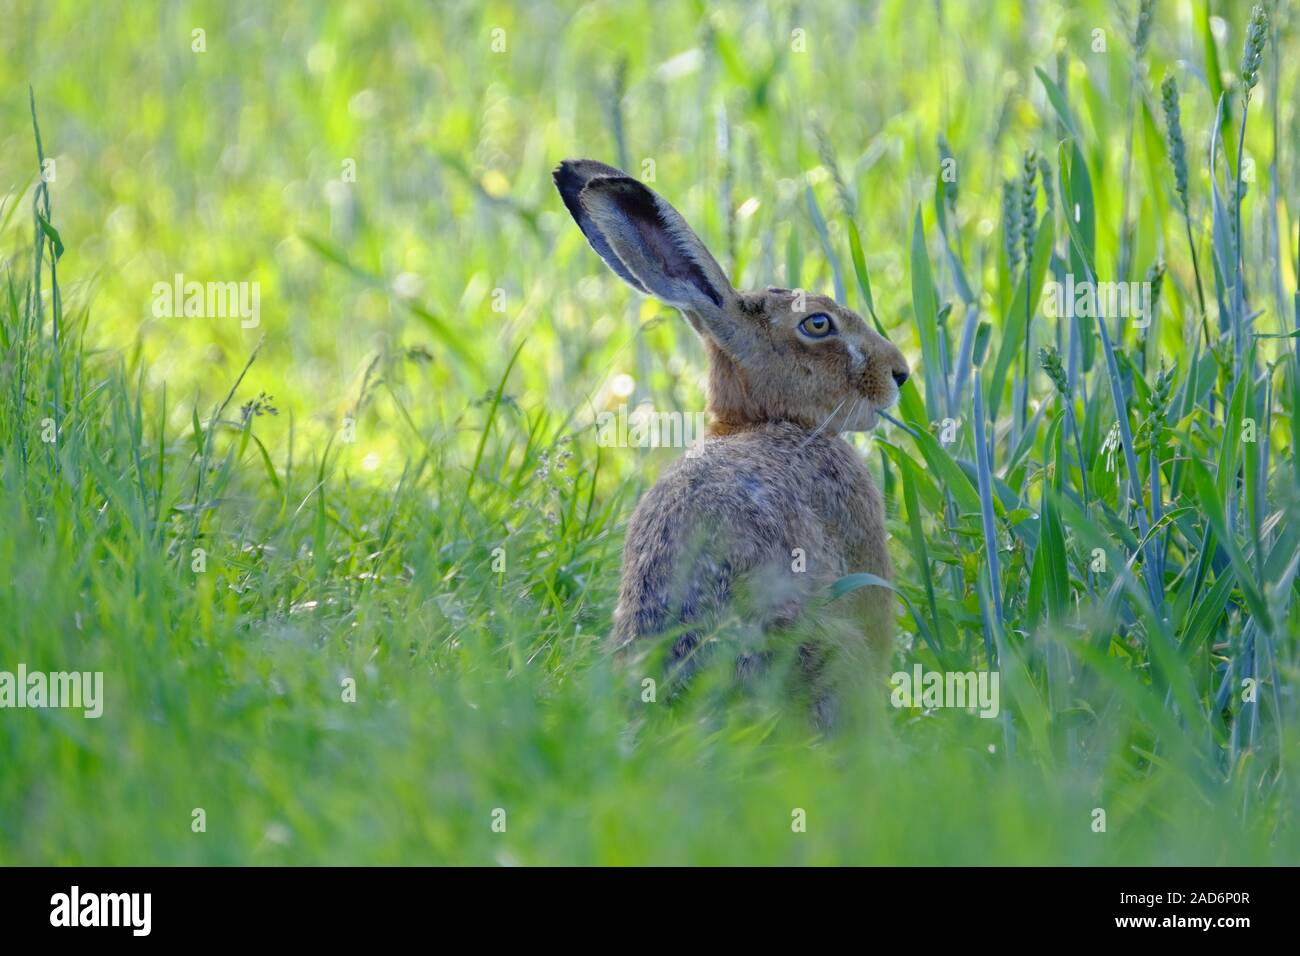 Hare, Lepus europaeus Stock Photo